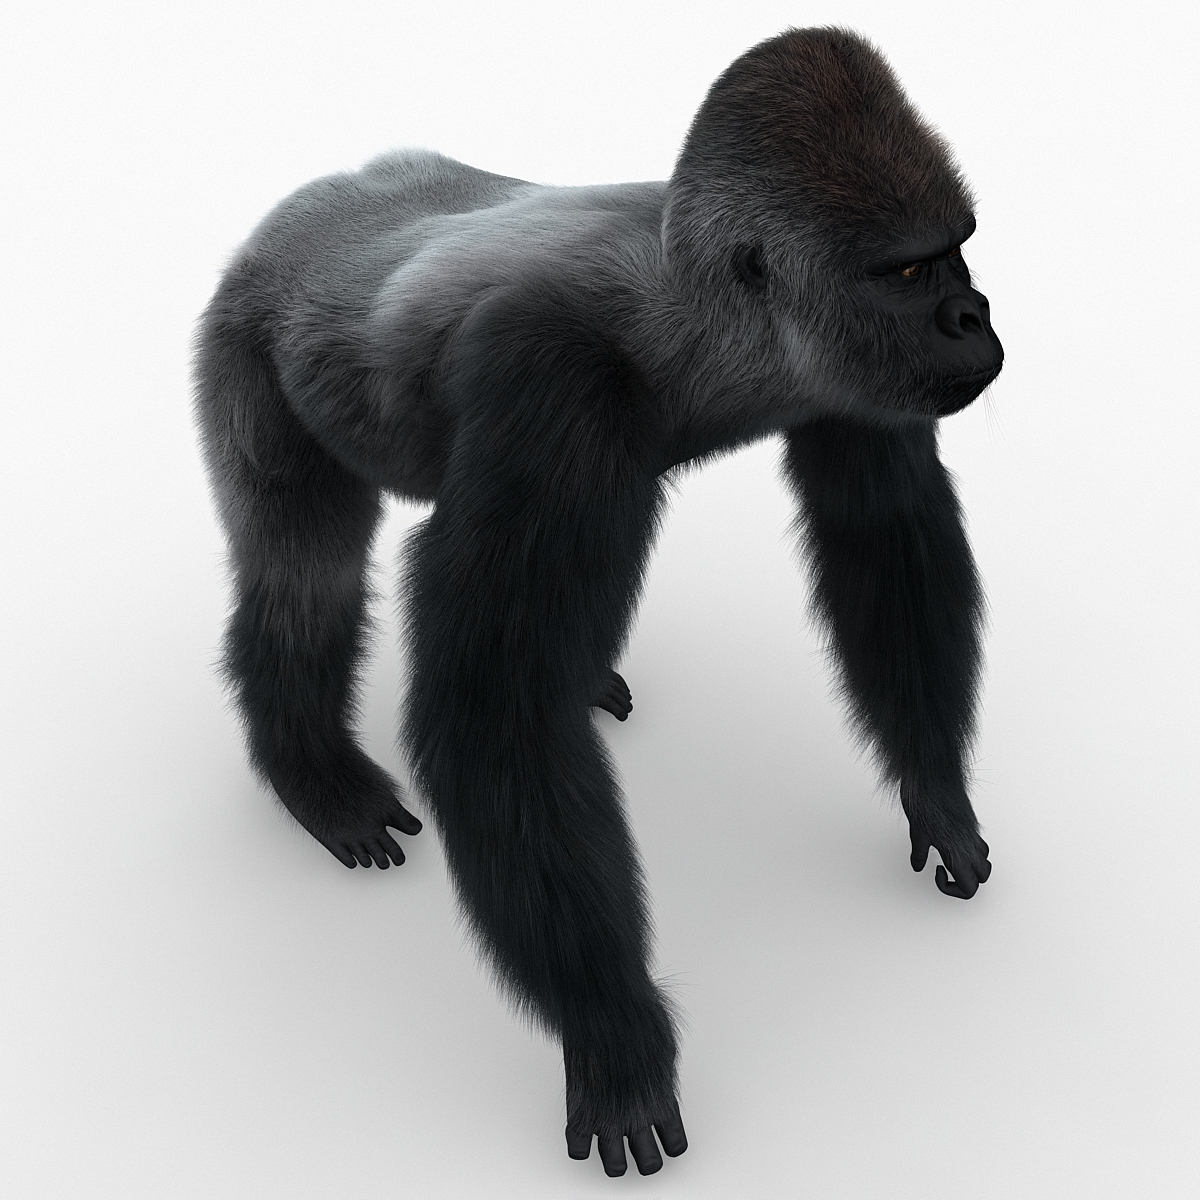 gorilla pose 2 fur 3d model